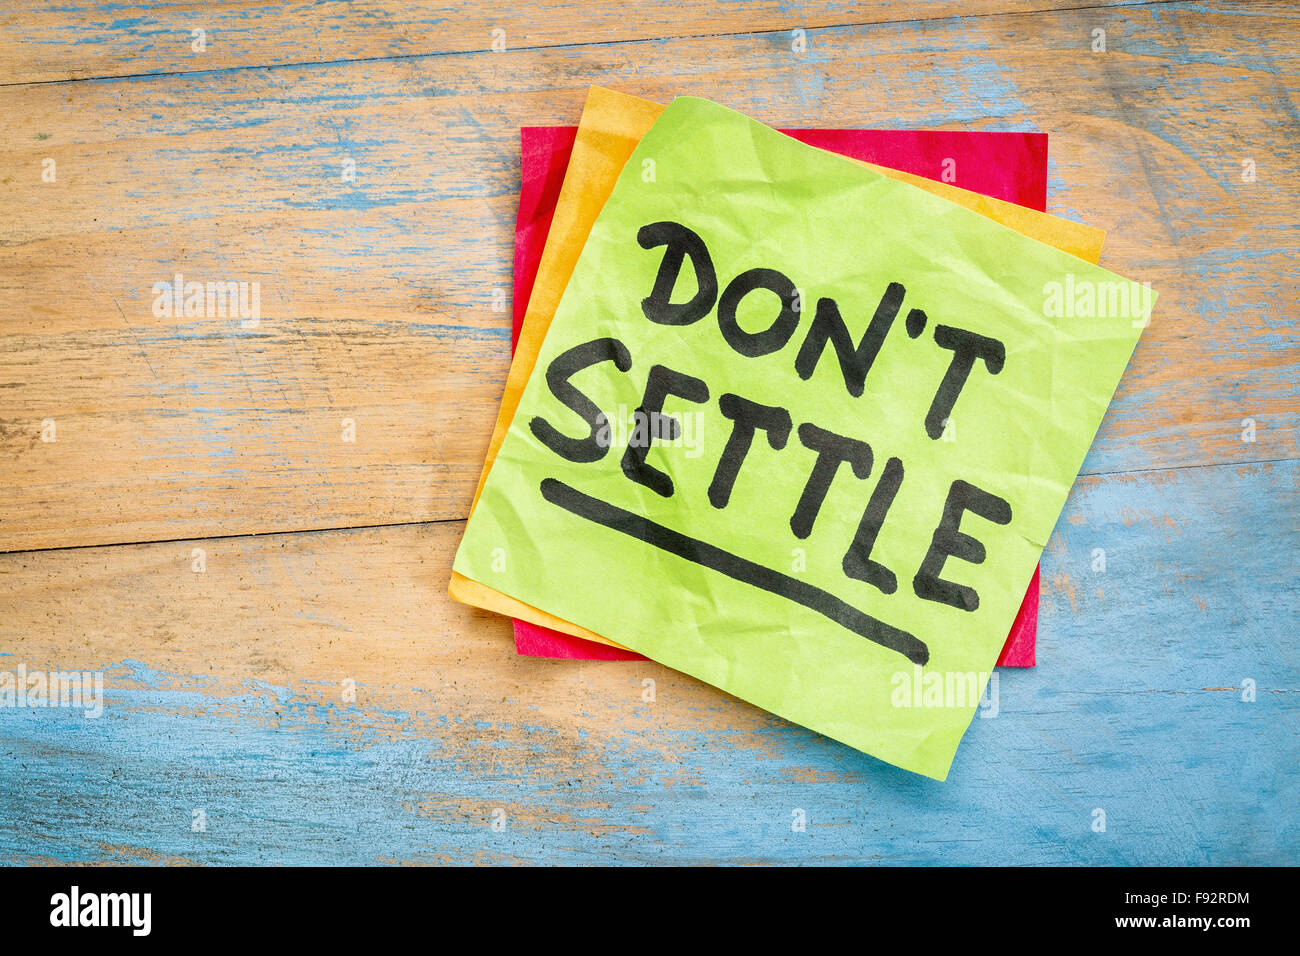 Do not settle - motivational advice or reminder on a sticky note Stock Photo